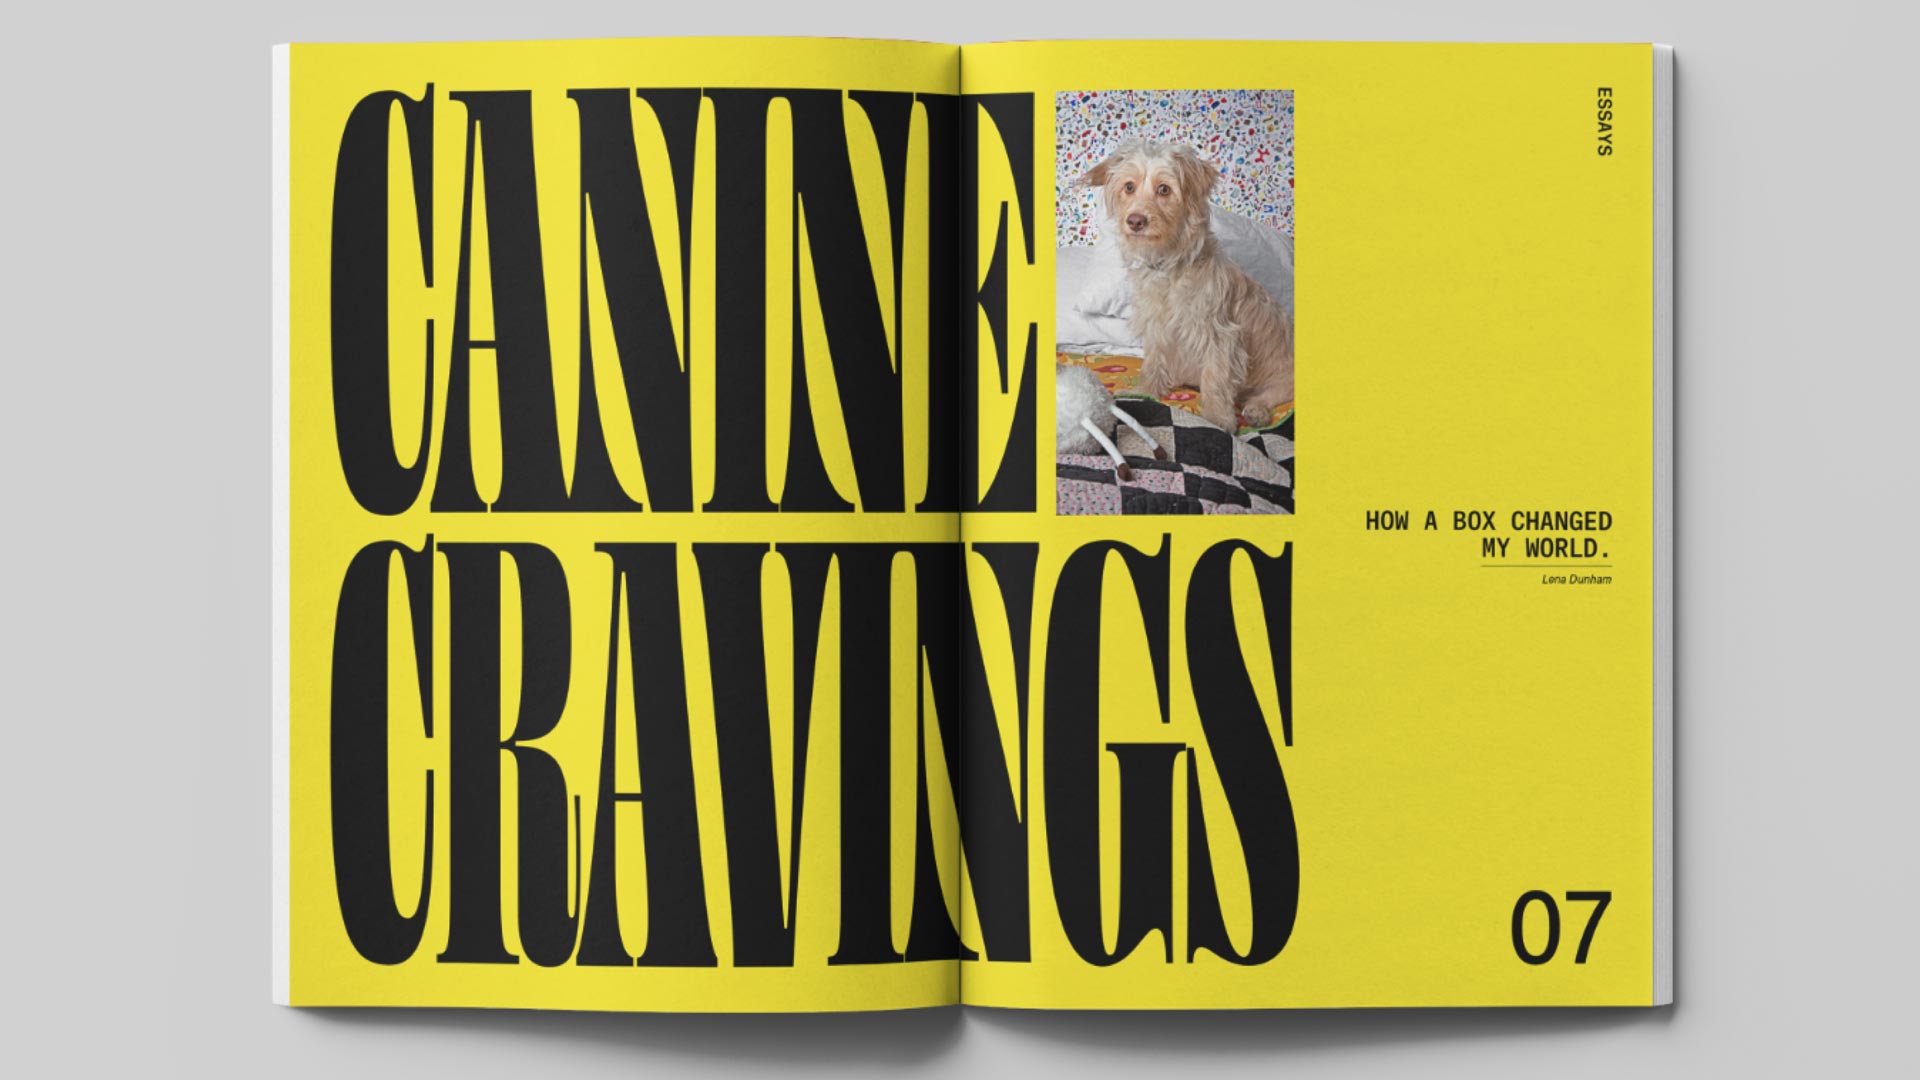 zra Lee magazine design - Wag & Bone - canine cravings